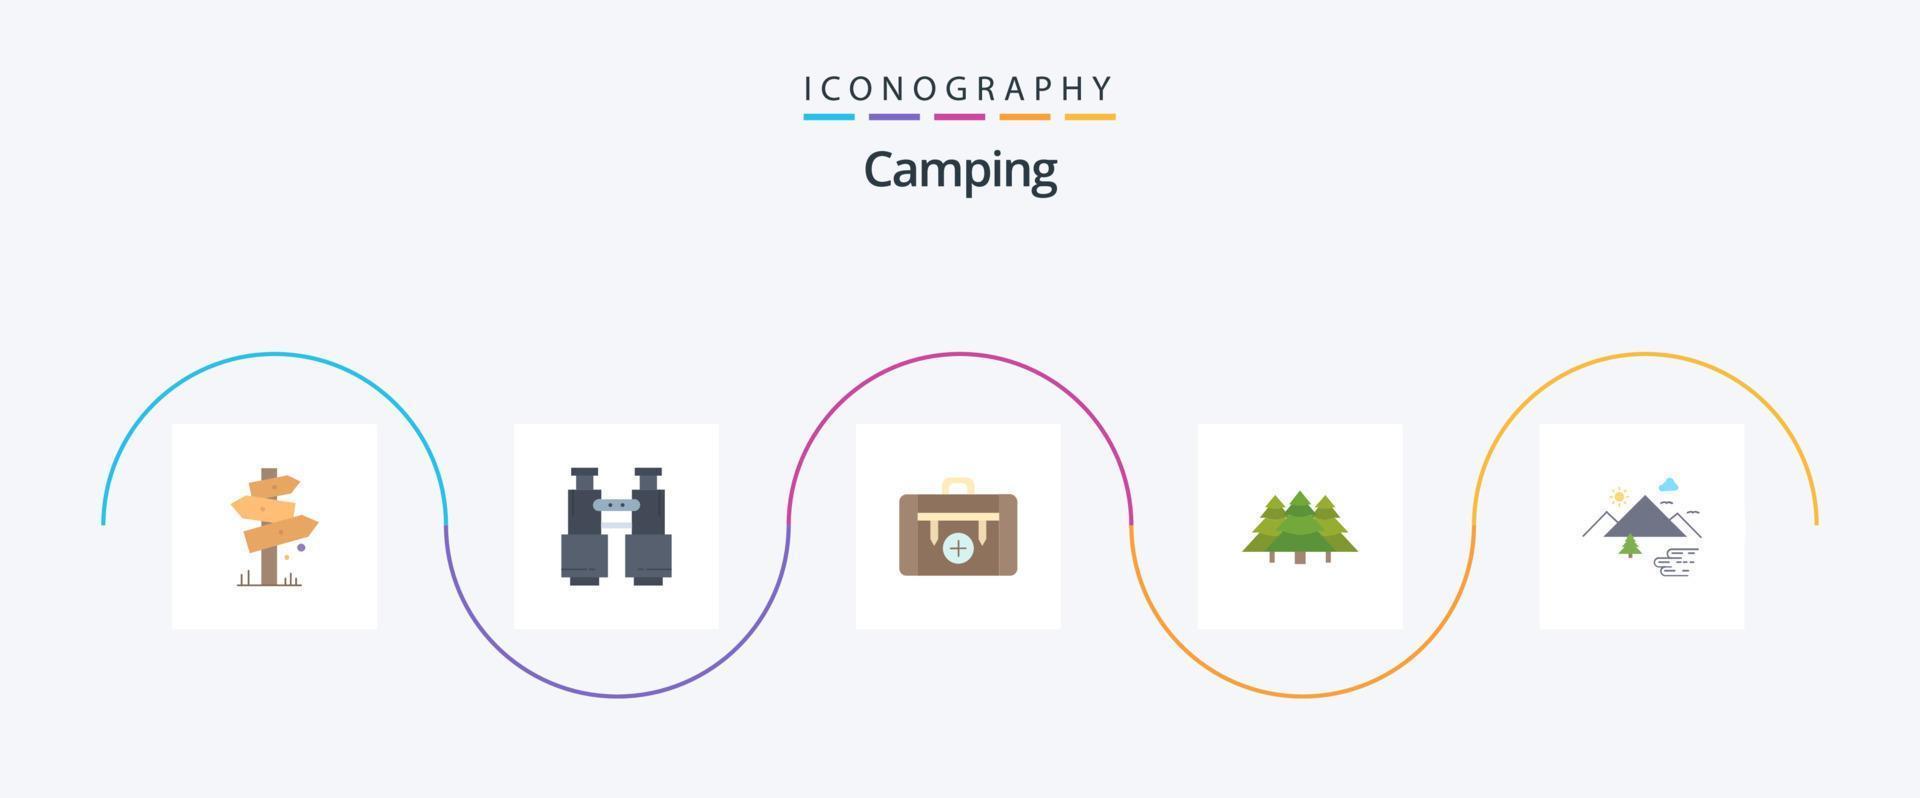 camping vlak 5 icoon pak inclusief camping. bagage. ontdekken. hiking. camping vector